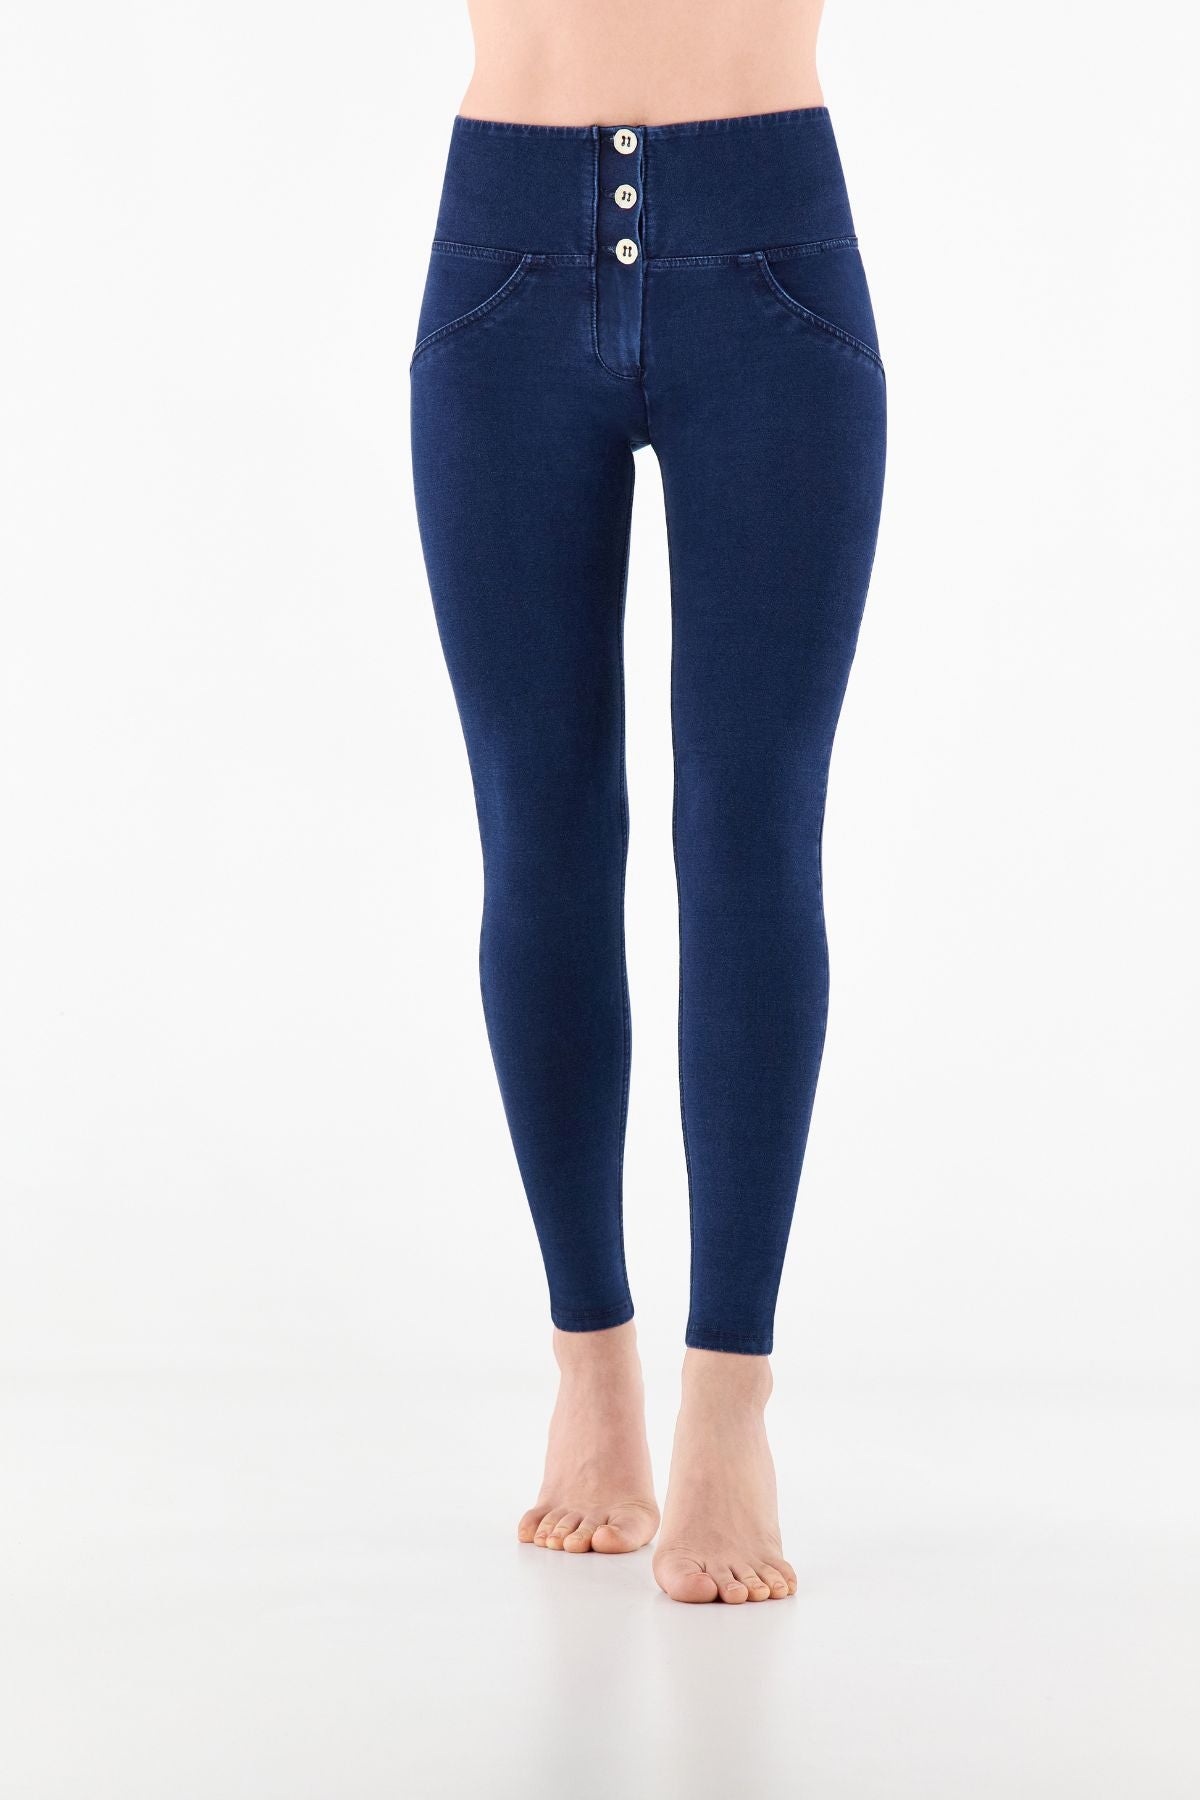 Shop Women's Solid Light Blue Denim Leggings Online | GoColors